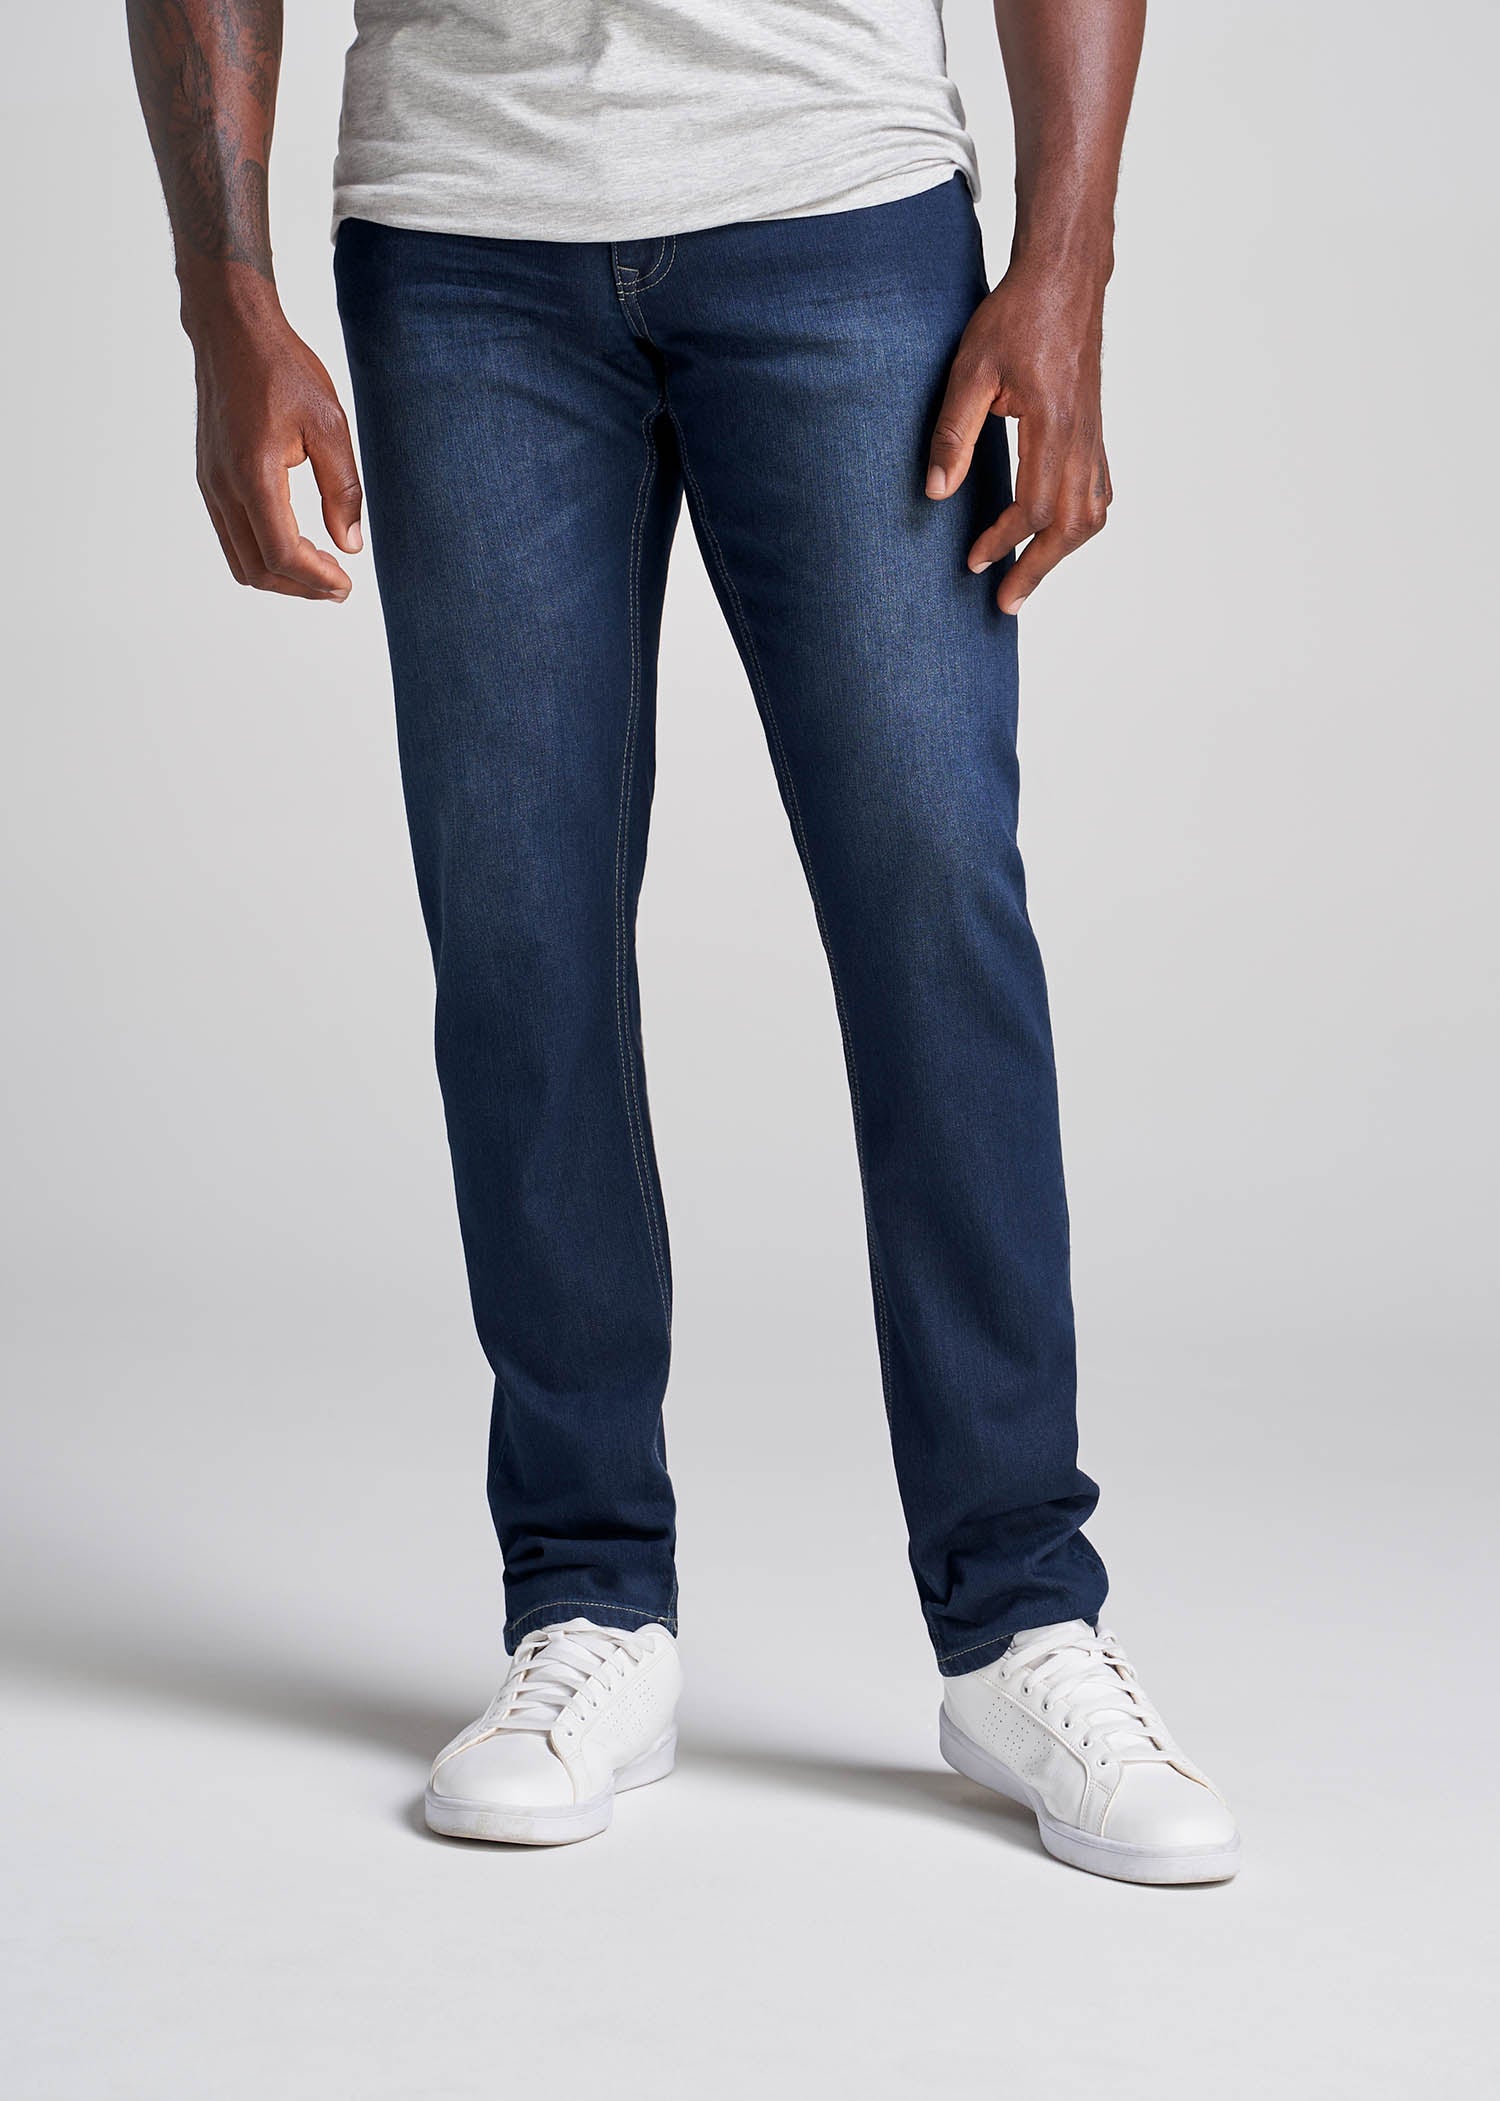 American_Tall_Men_CarmanTaperedFit_BlueSteel_Tall_Men_s_Jeans-Front